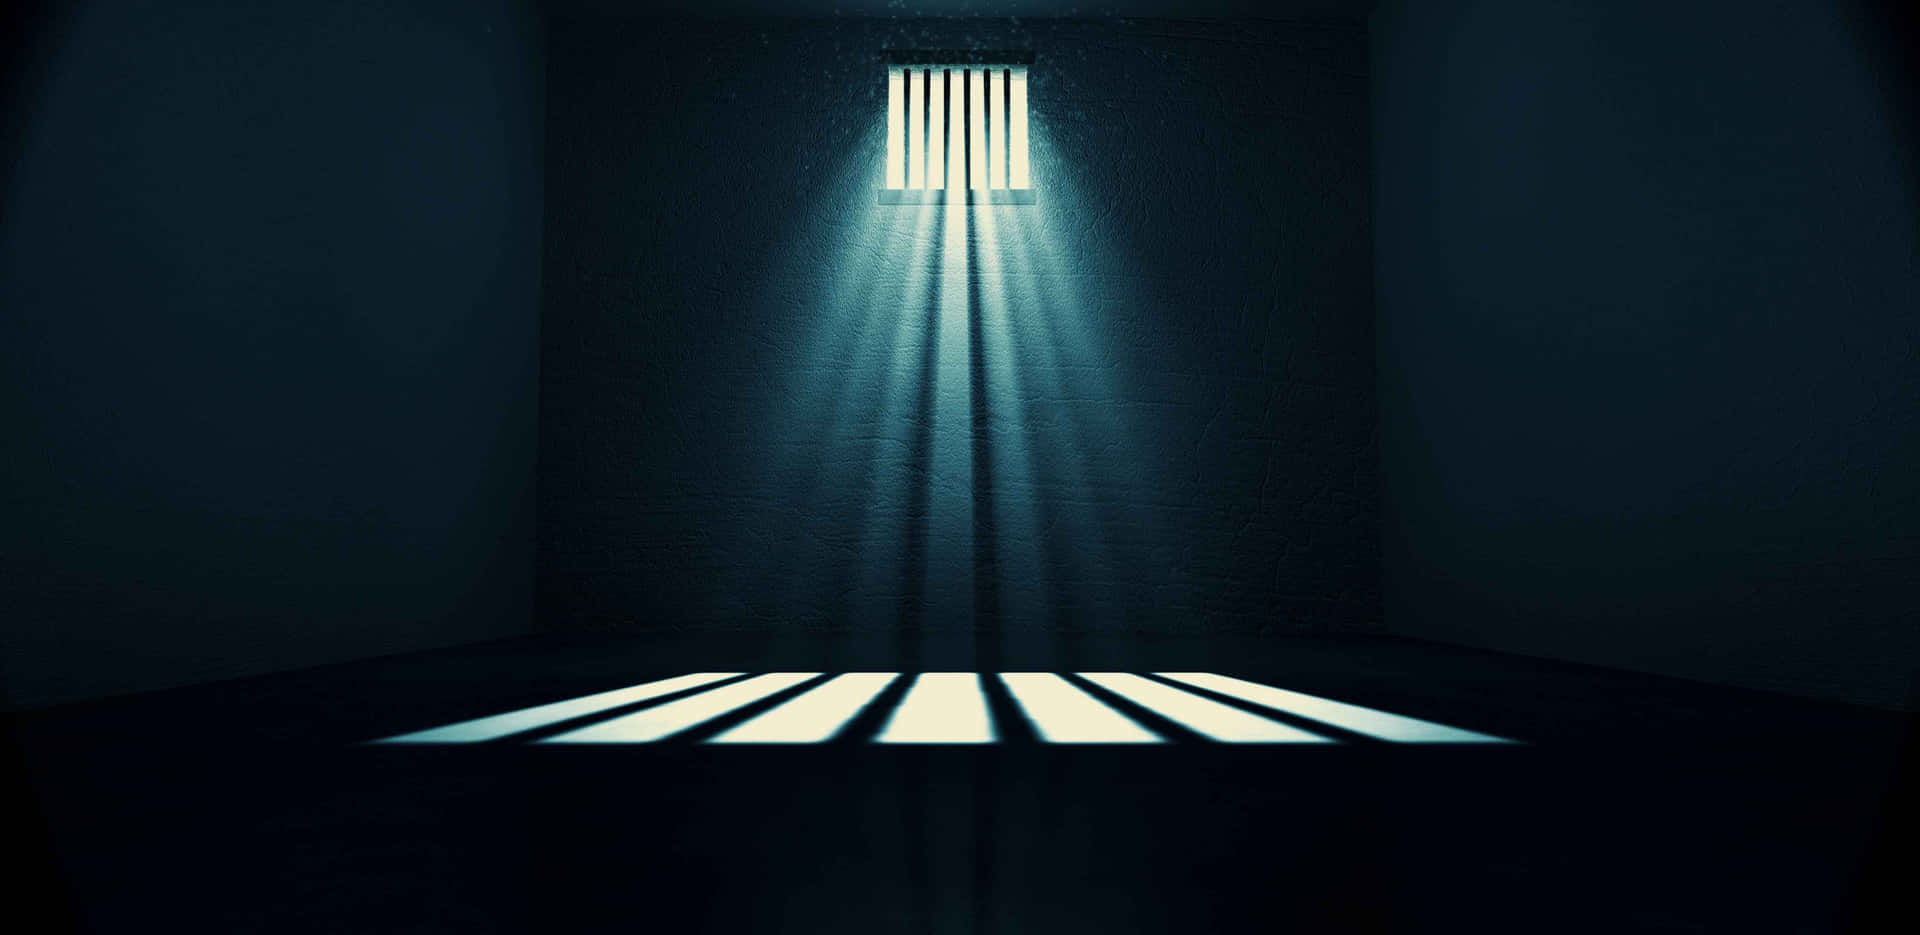 Jail Background 4400 X 2142 Background